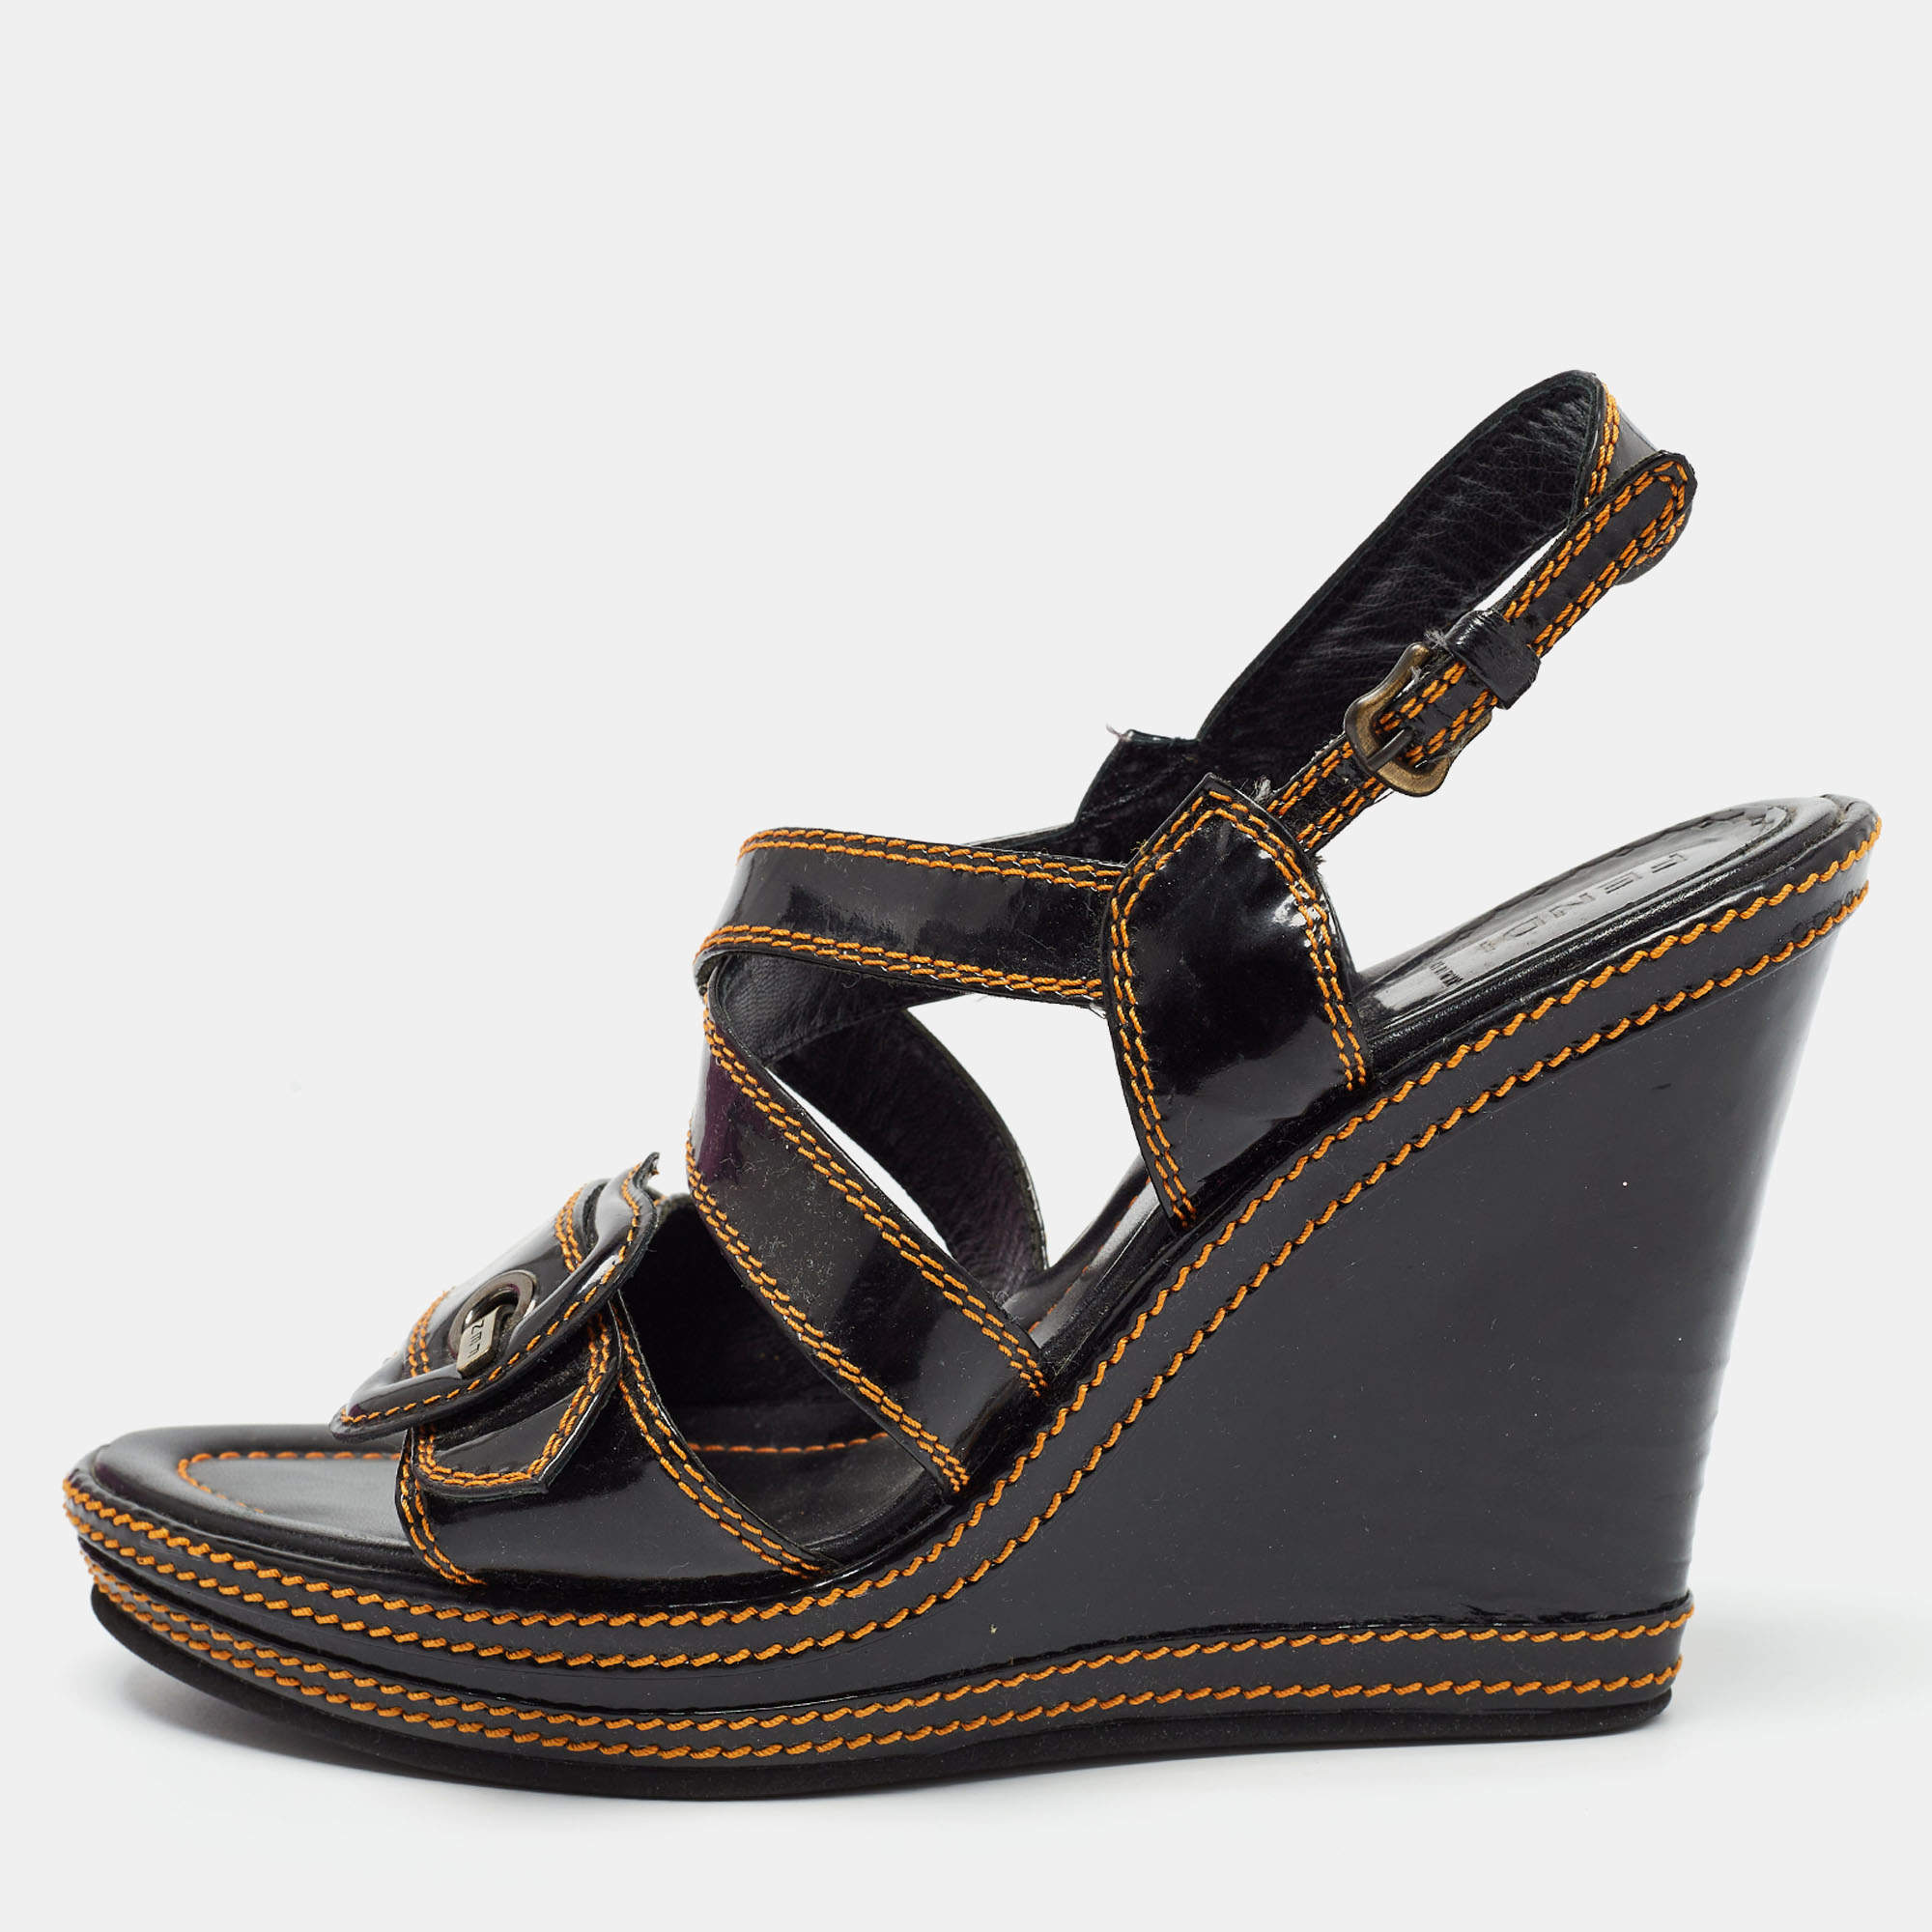 Fendi Black/Gold Patent Wedge Ankle Strap Sandals Size 40